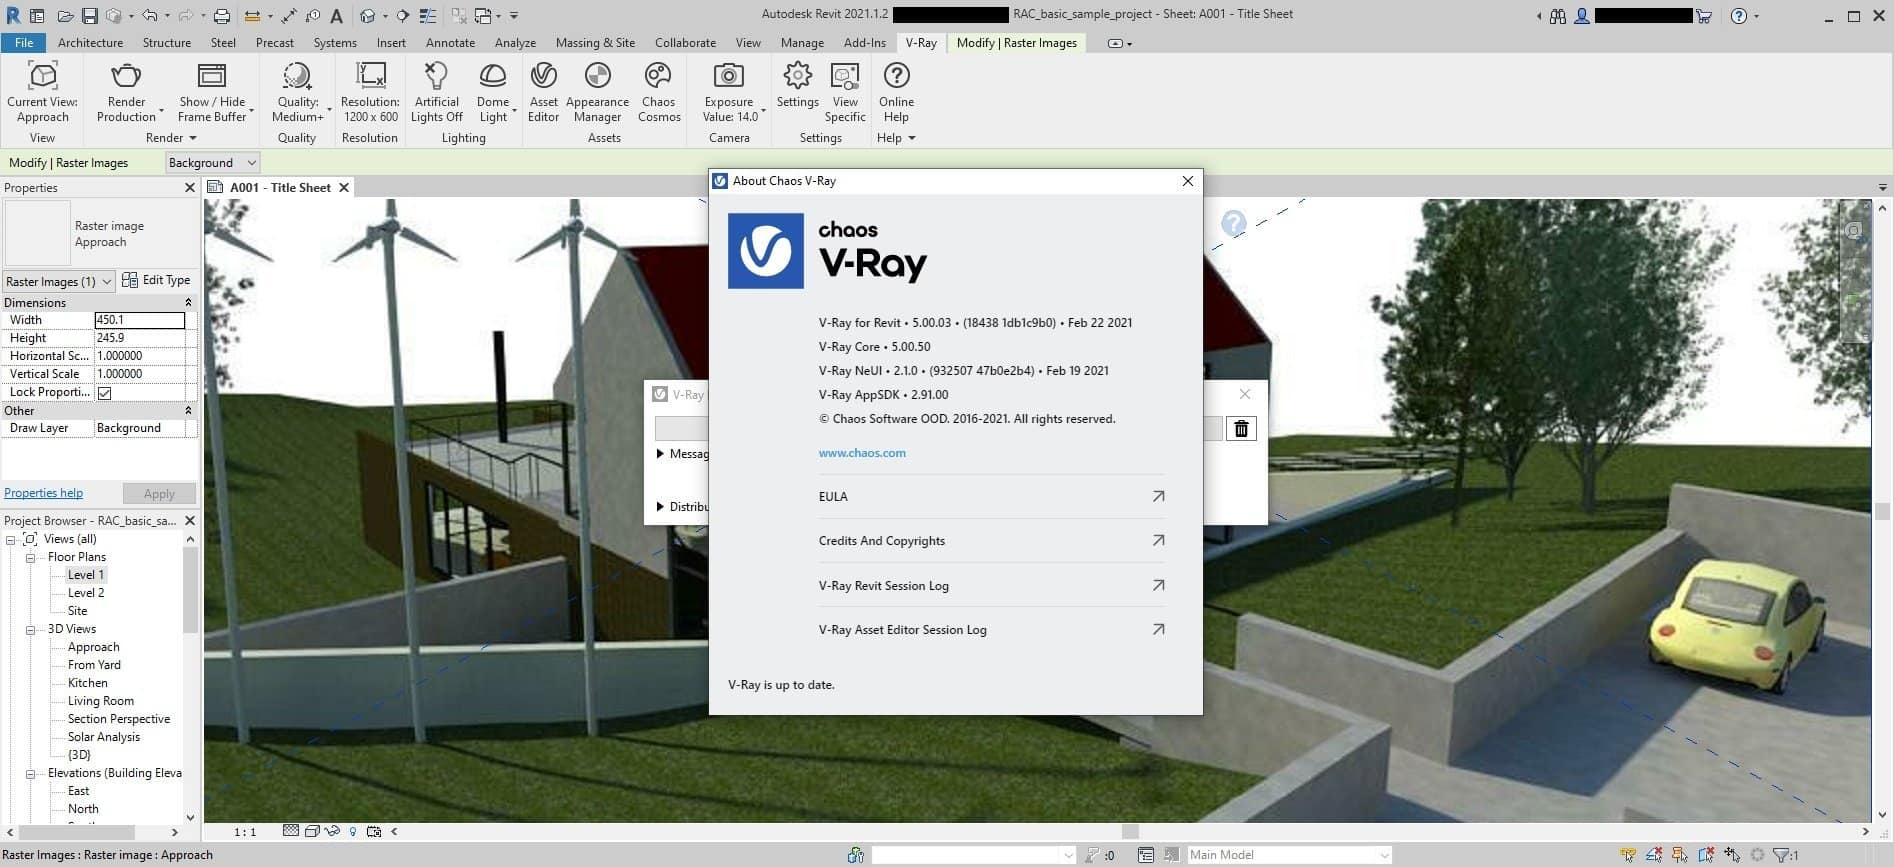 V-Ray Advanced For Revit For Windows Free Download full version